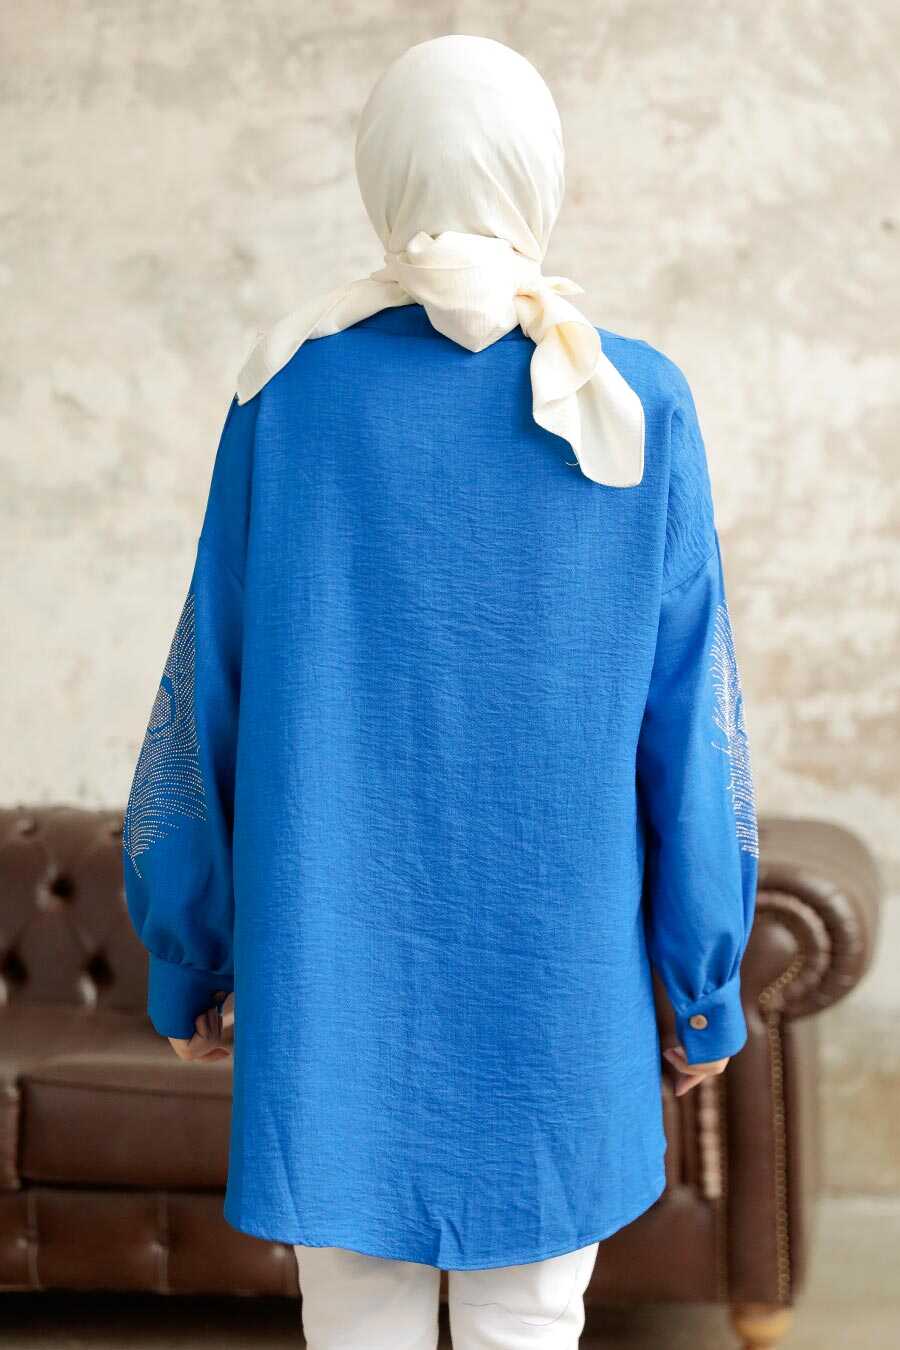 Neva Style - Sax Blue Hijab Tunic 11351SX